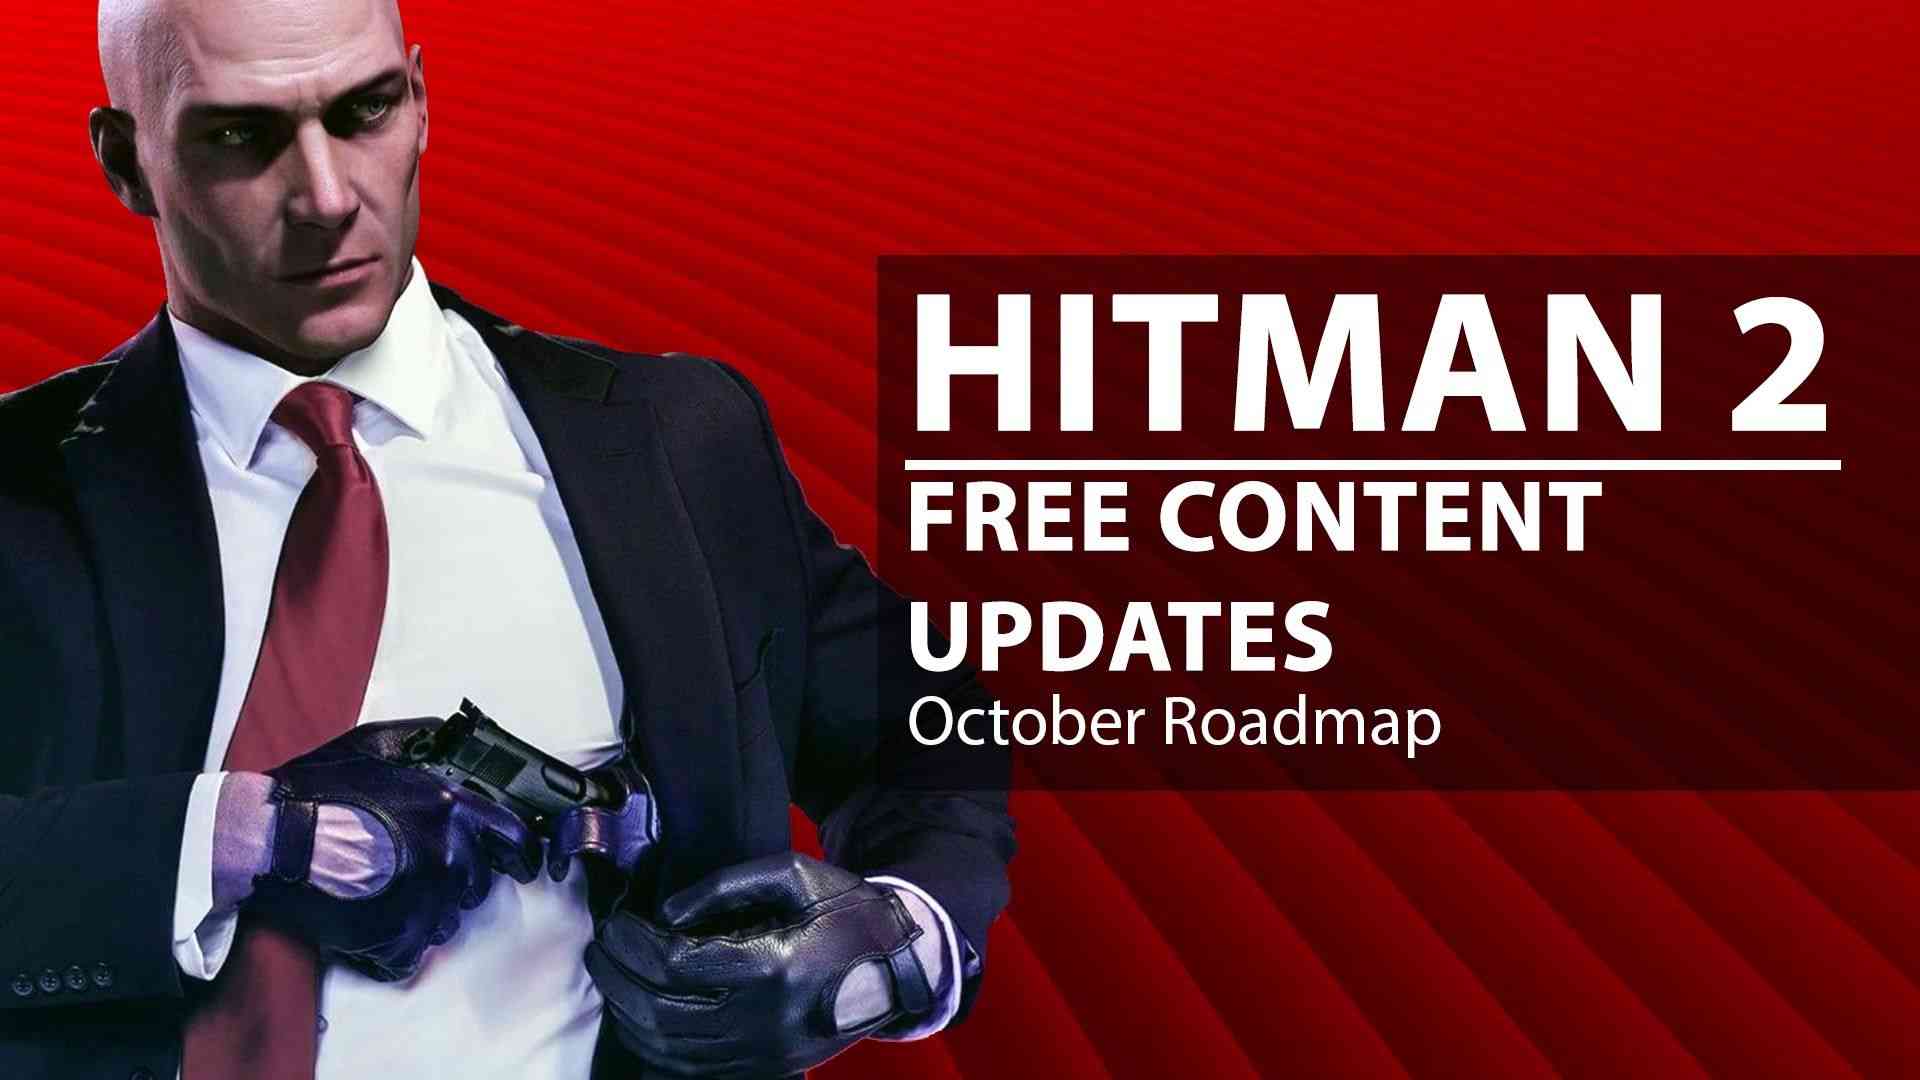 hitman 2 free content updates announced 3172 big 1